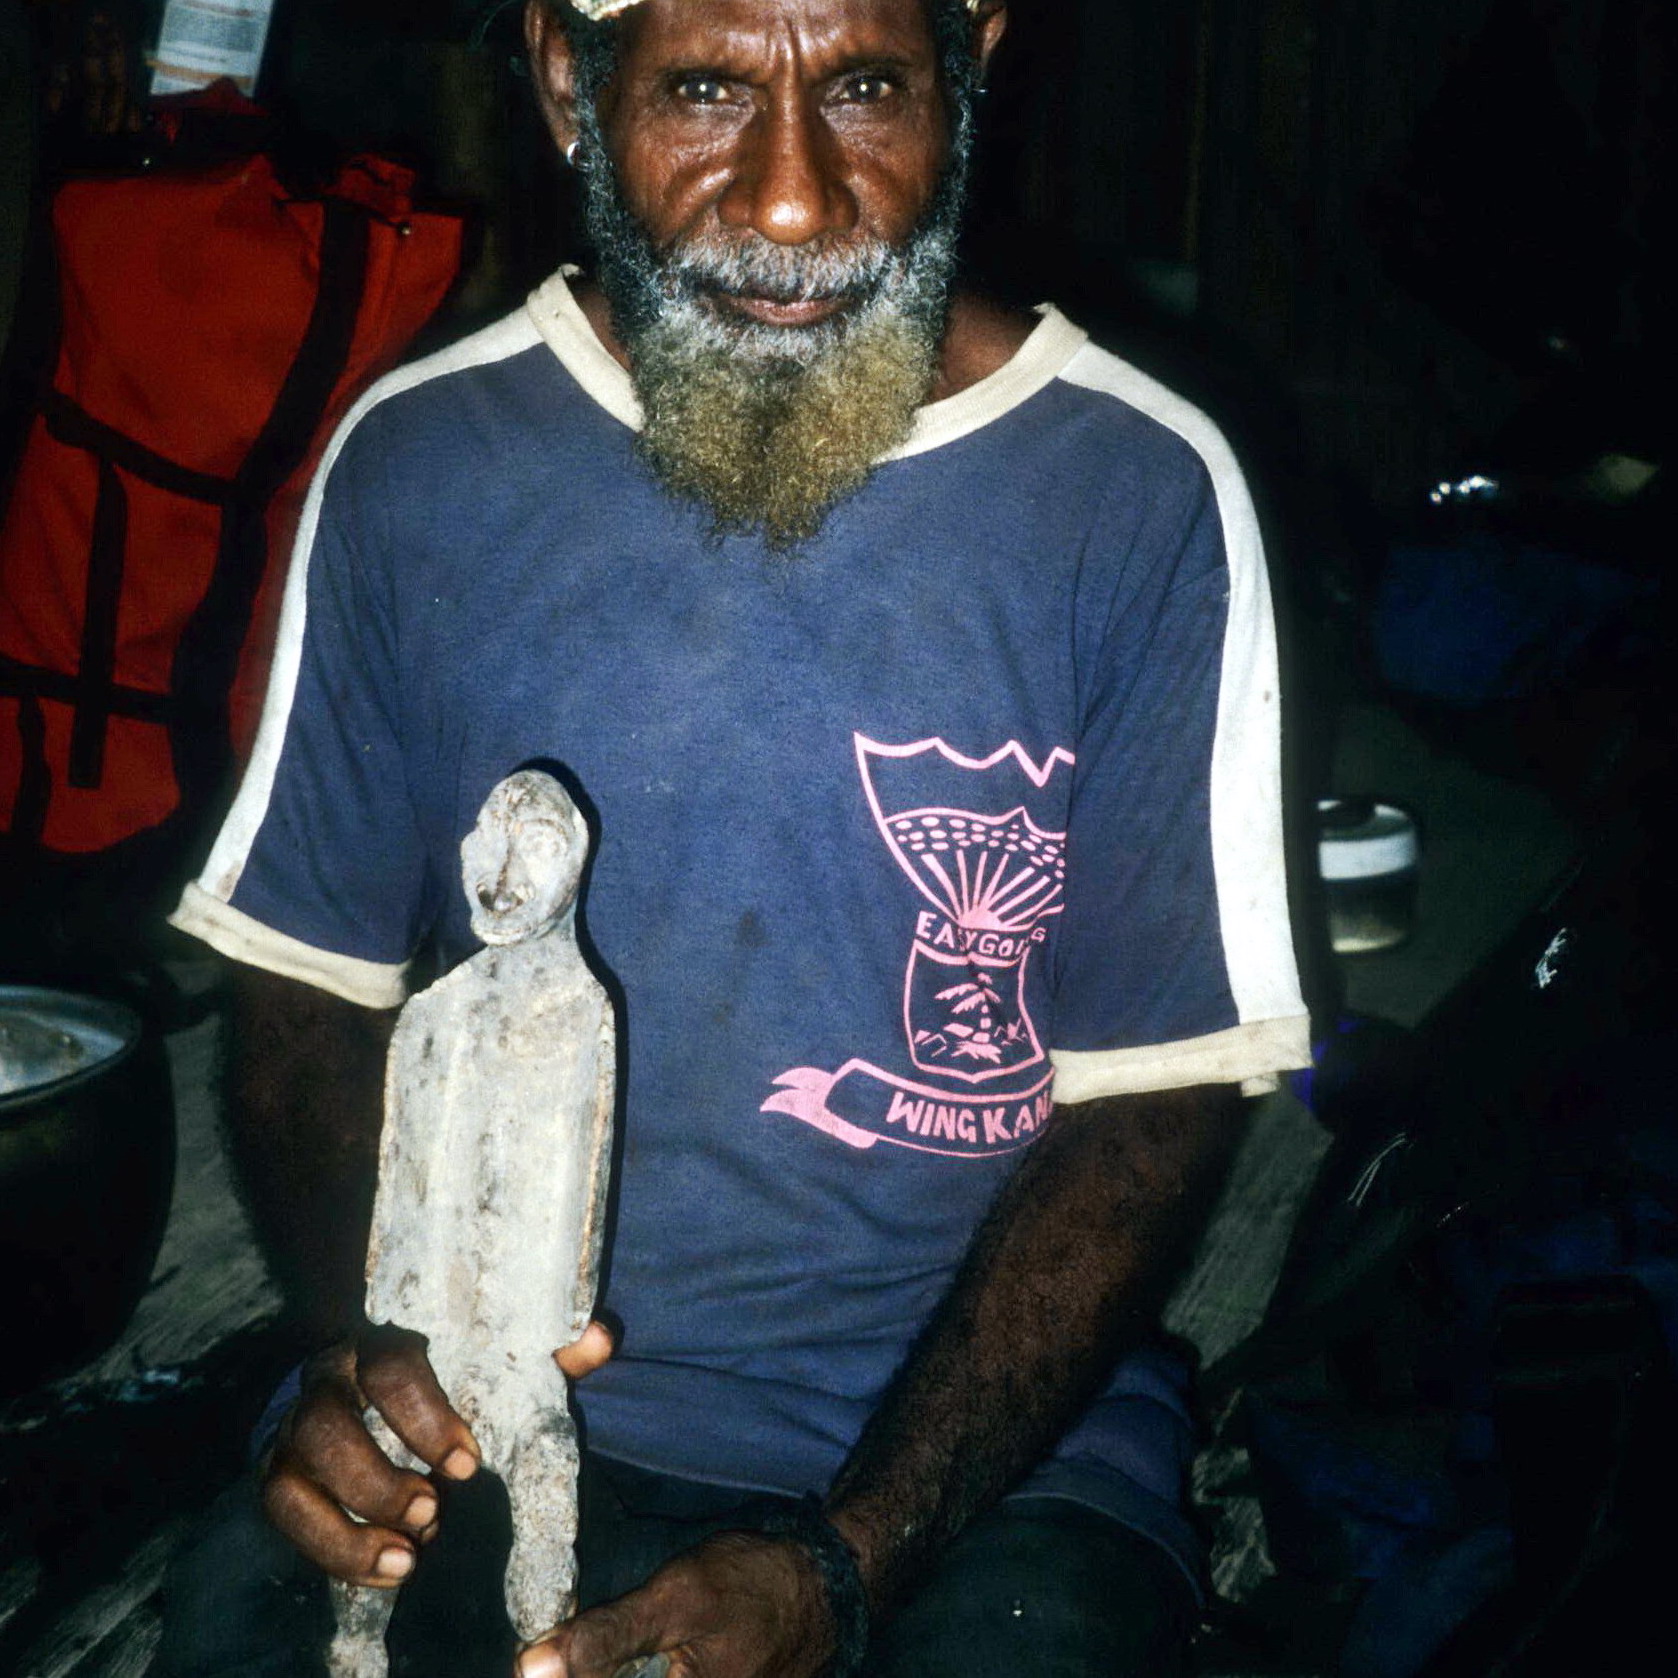 BatMan Figure, Inland Murik Lakes, New Guinea Art, Oceanic Art, Tribal Art, South Pacific Art